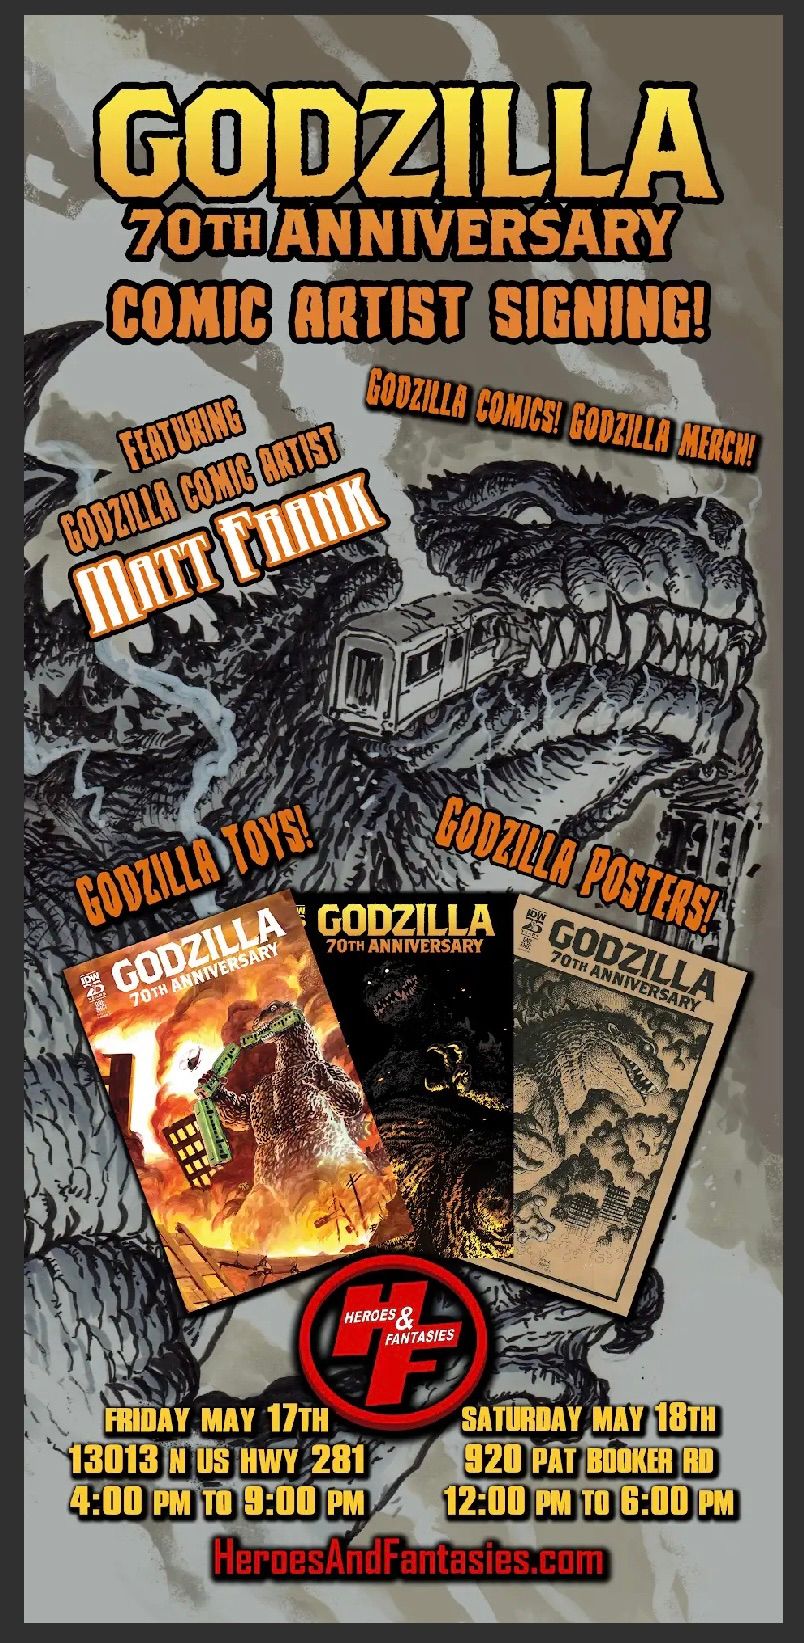 Godzilla 70th Anniversary Matt Frank Comic Book Signing!